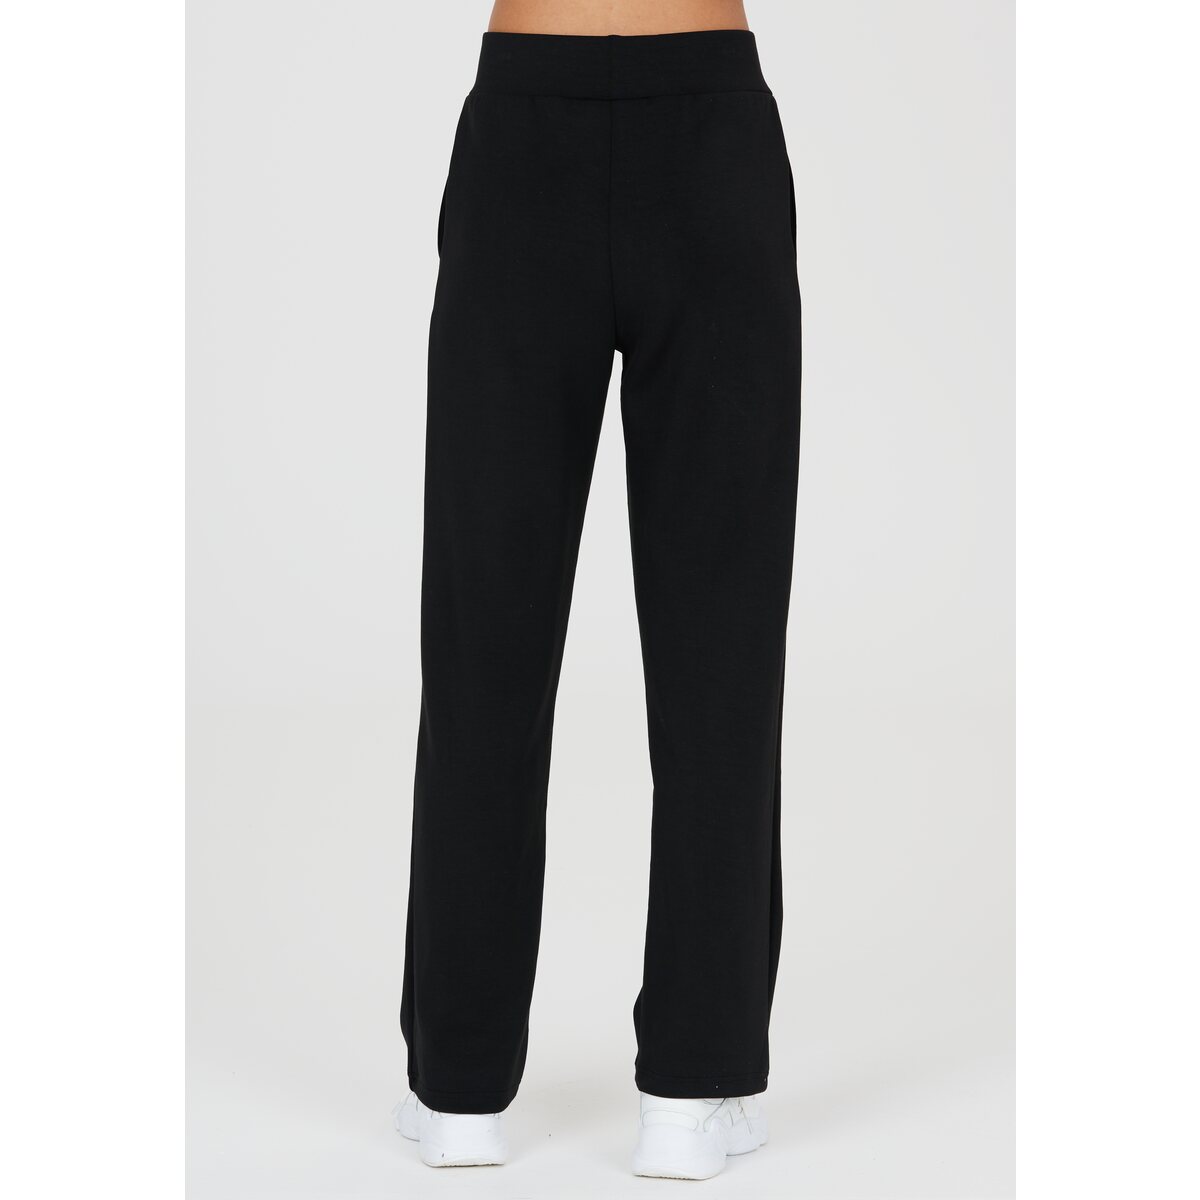 Athlecia Jacey Womenswear Regular Pants - Black 2 Shaws Department Stores